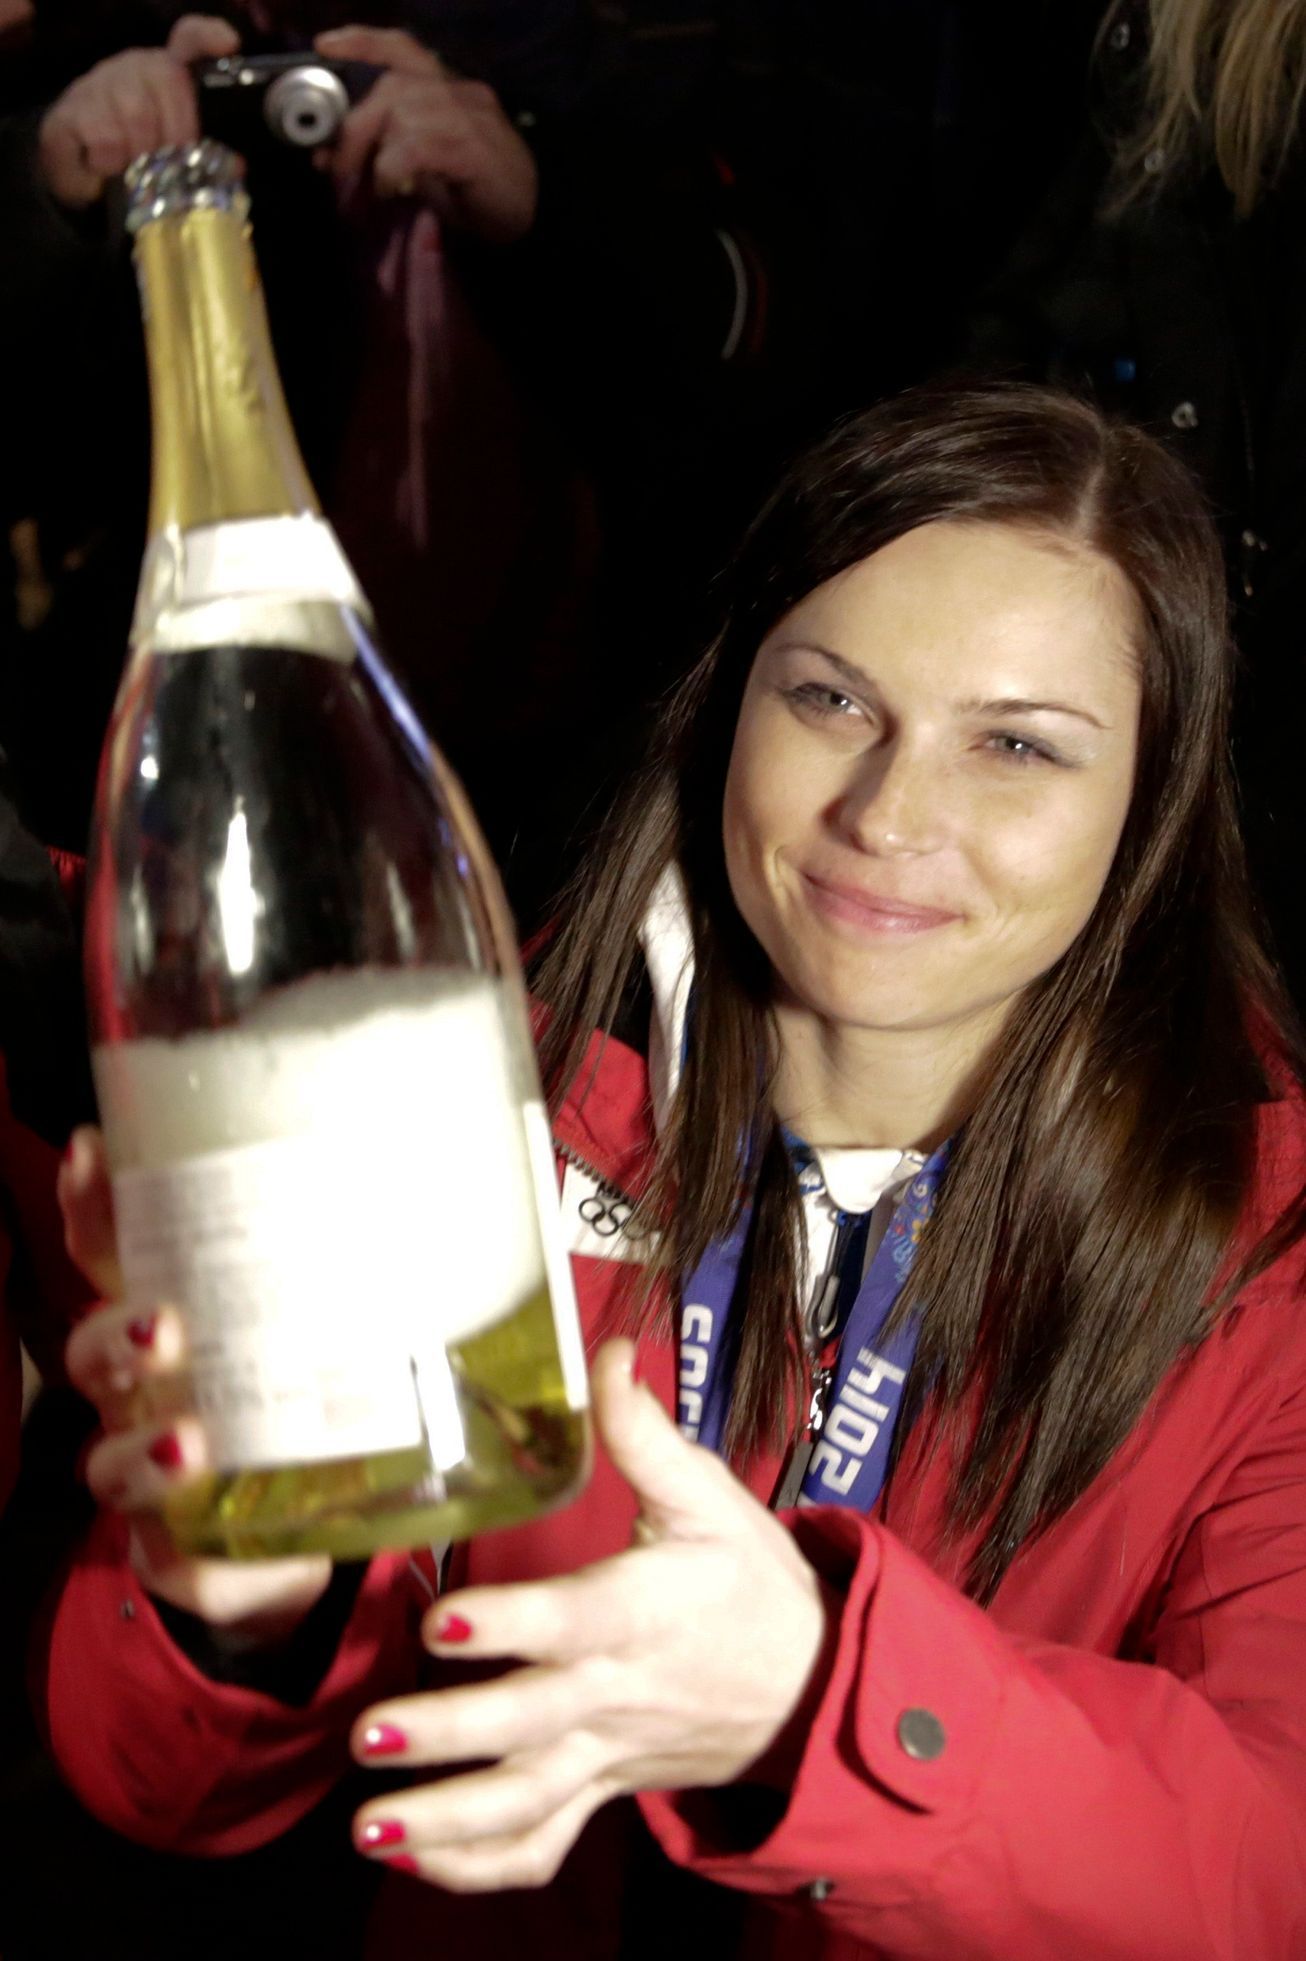 Austrian gold medallist Fenninger celebrates in the Austria house at the Sochi 2014 Winter Olympics